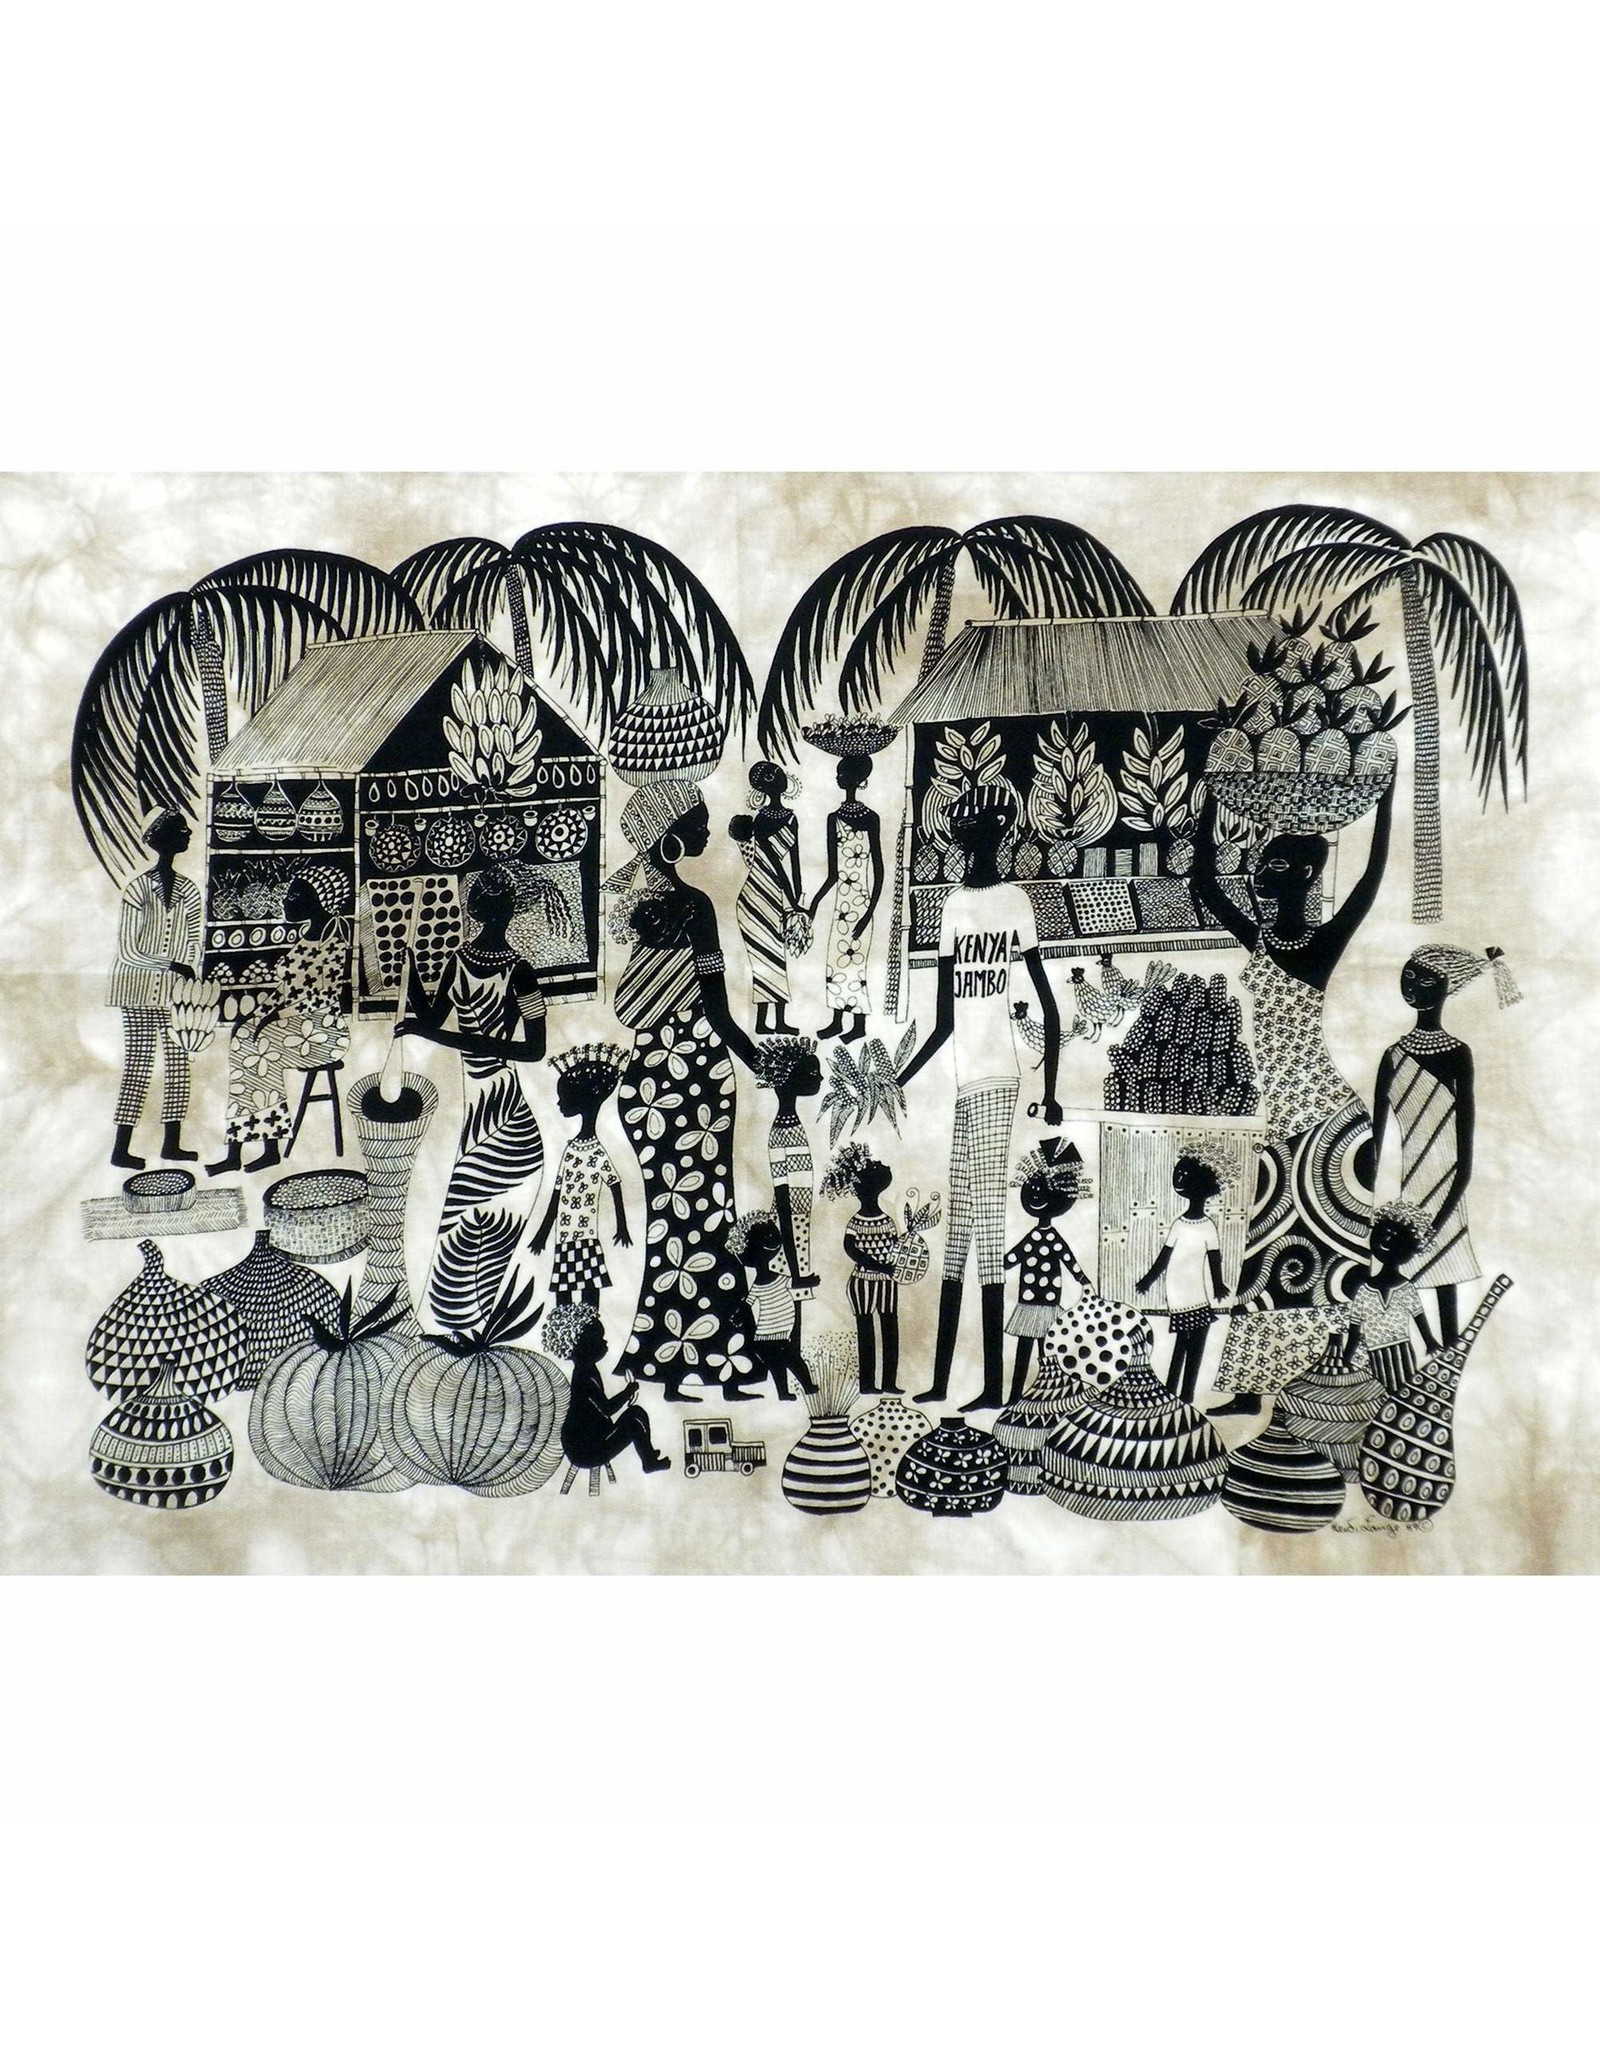 Global Crafts Heidi Lange unframed Batik Cotton Screen Print